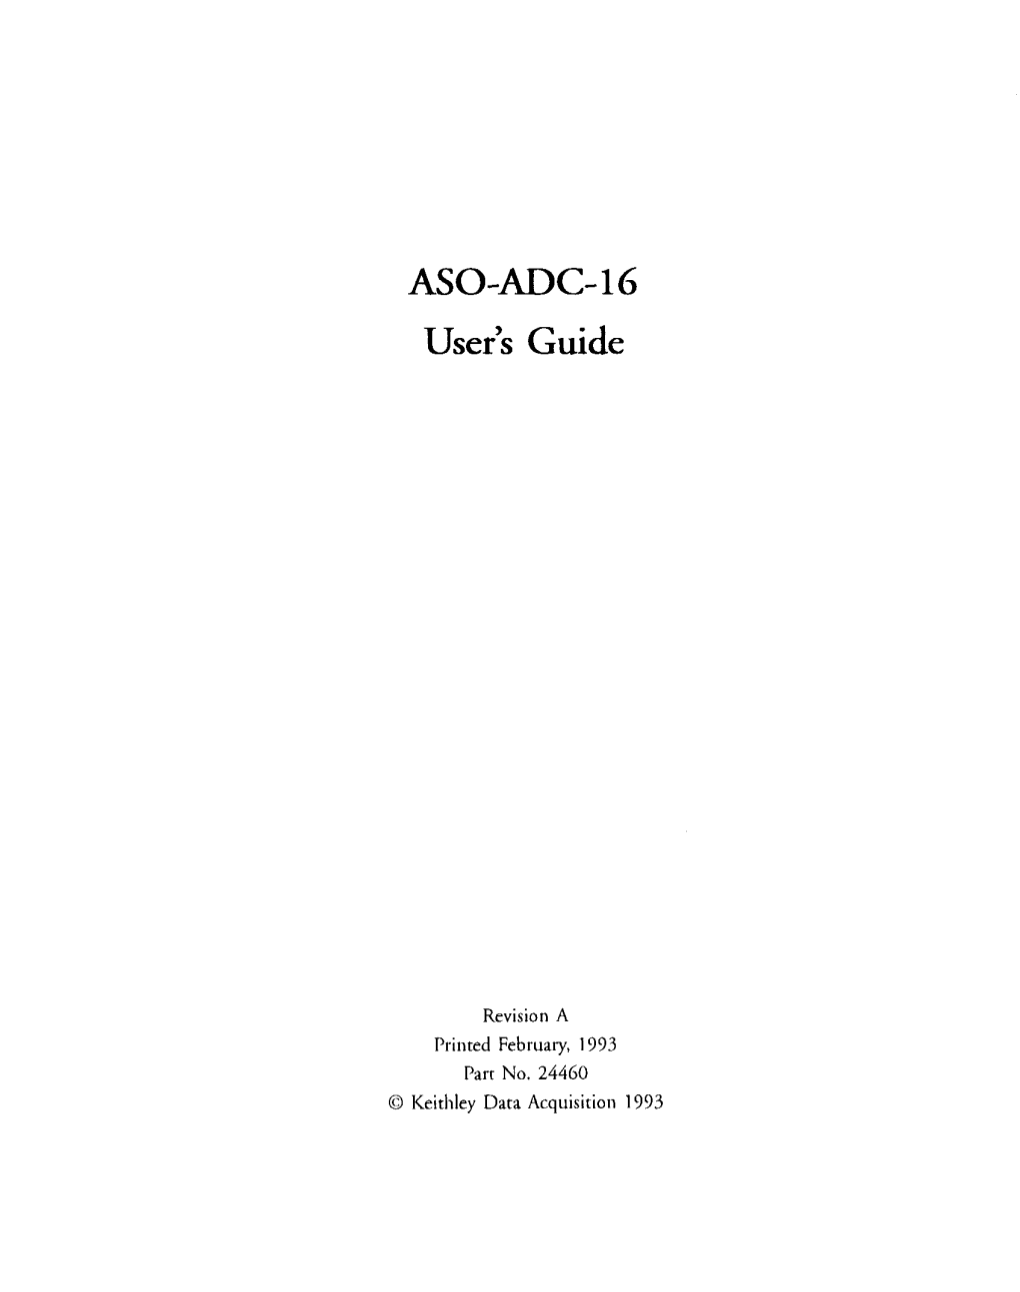 ASO-ADC-16 User’S Guide